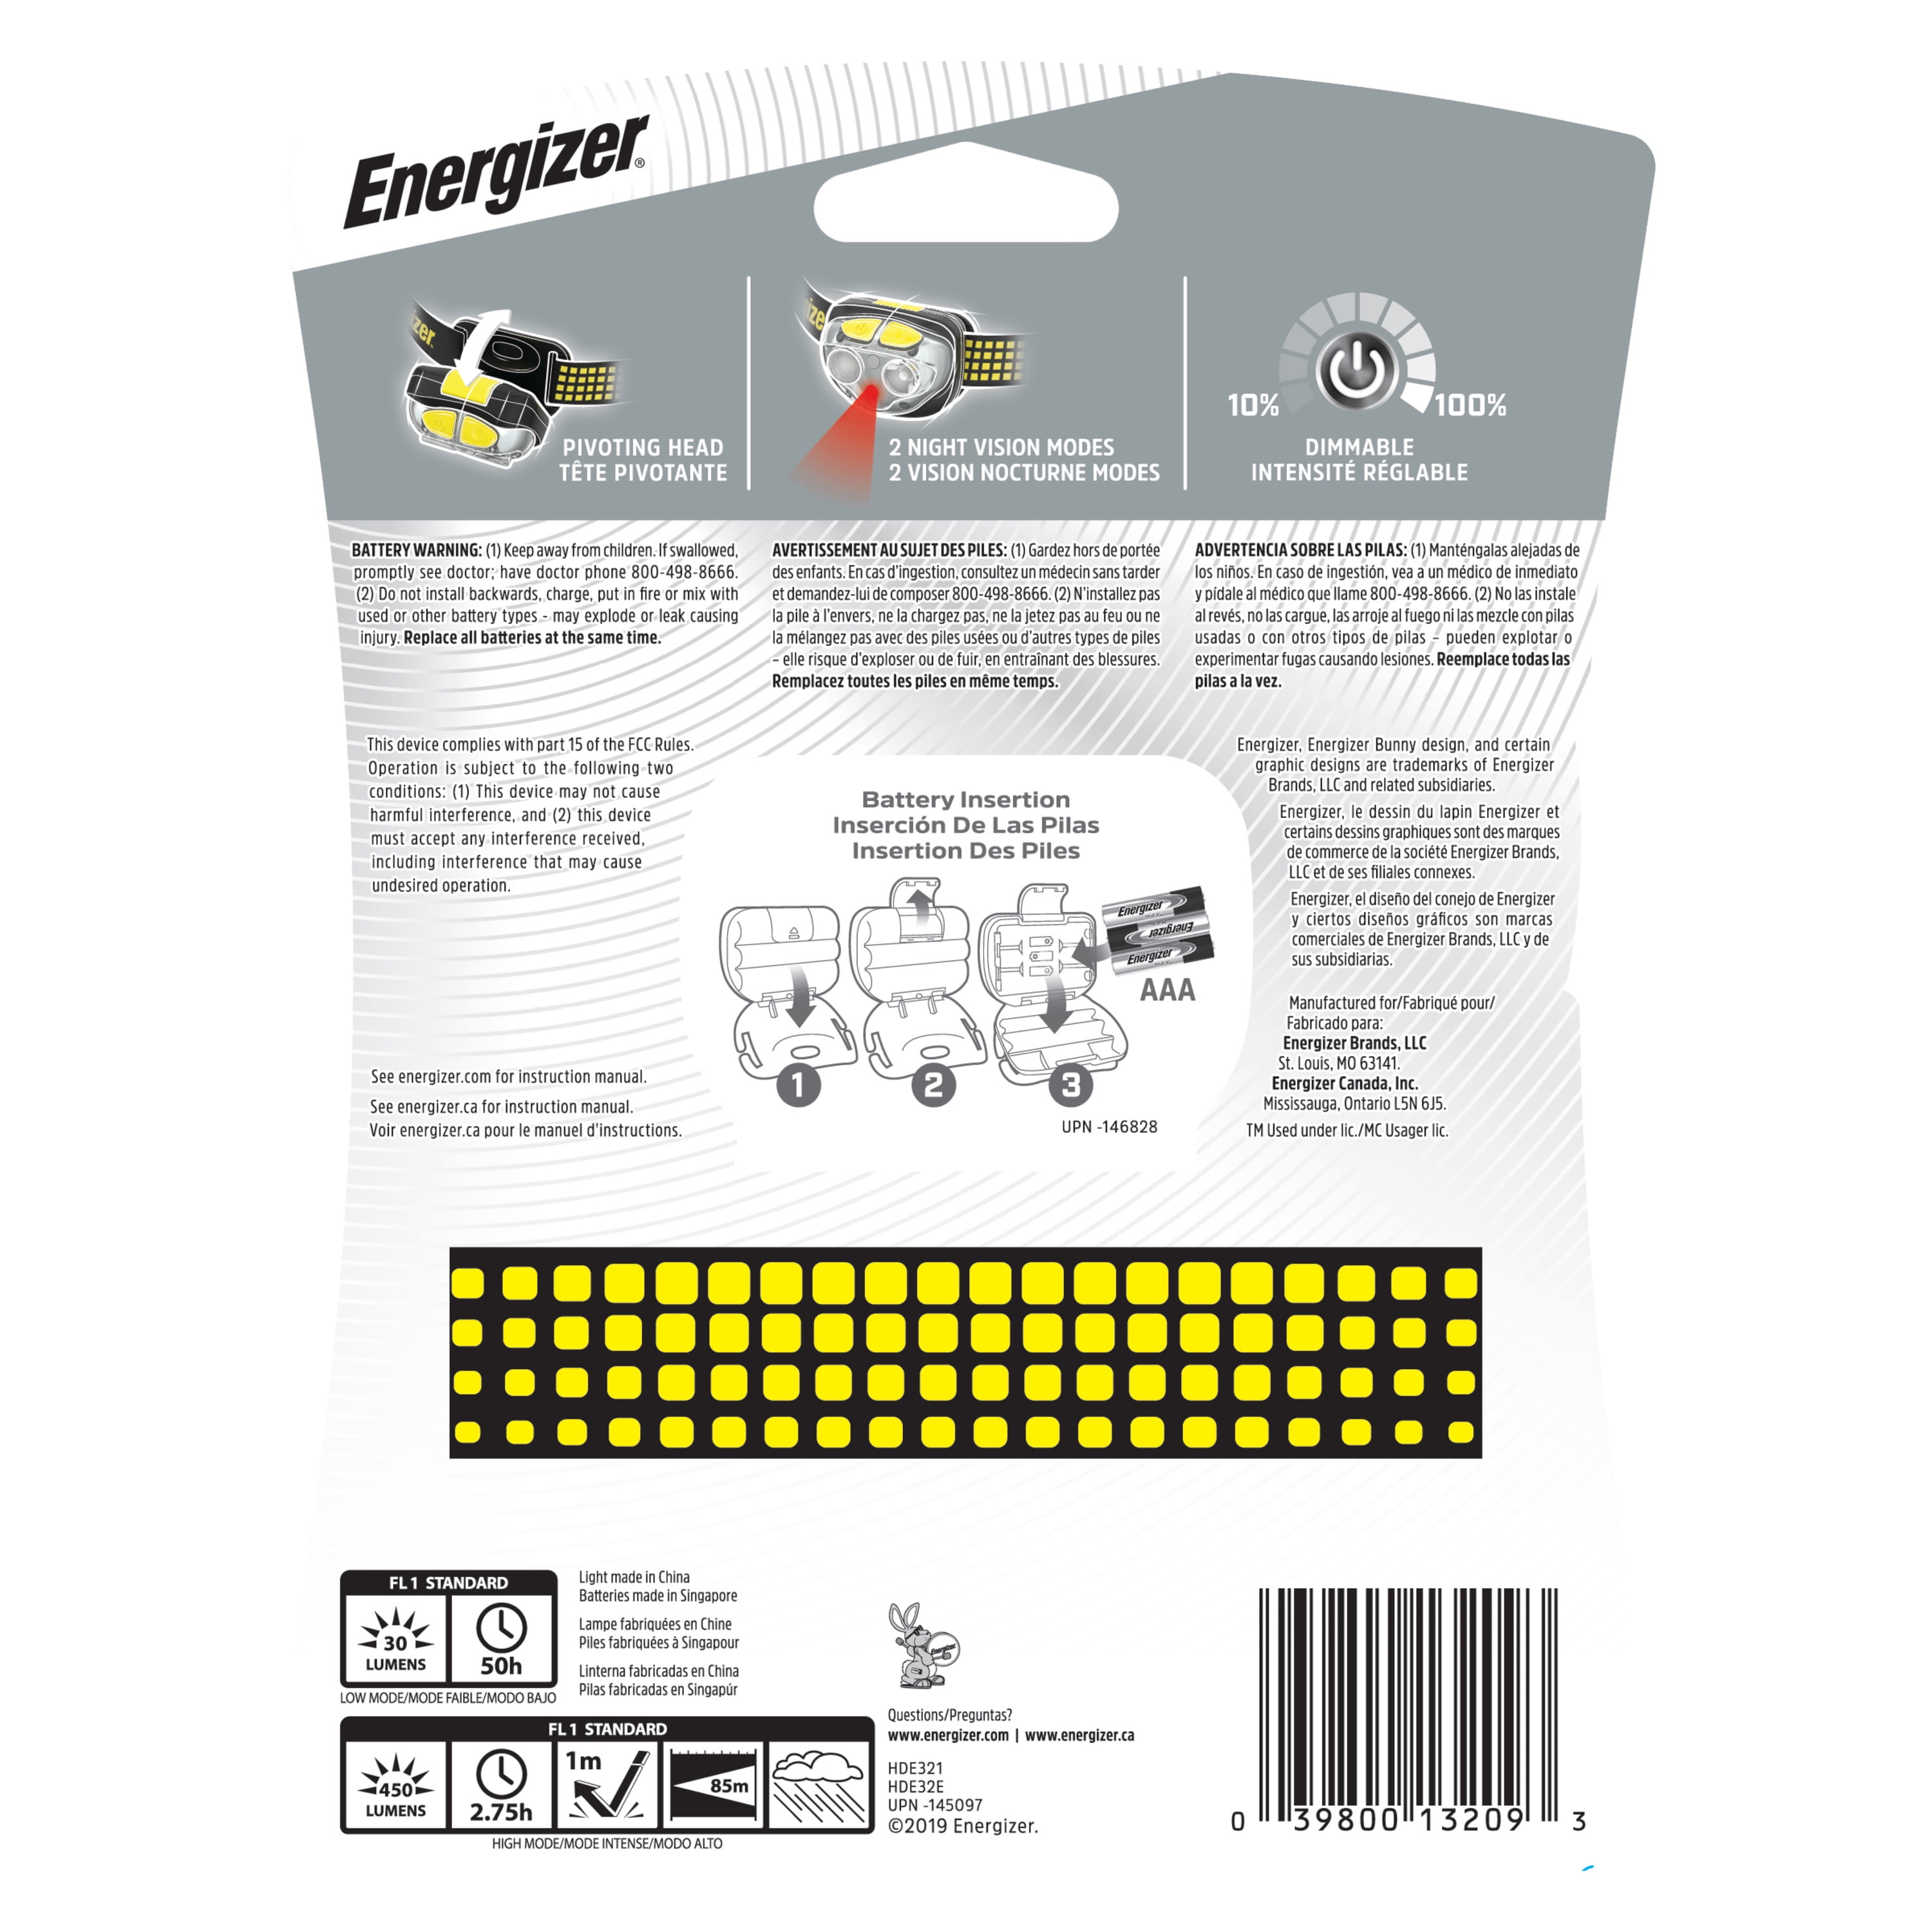 Energizer Vision Ultra HD LED Headlamp